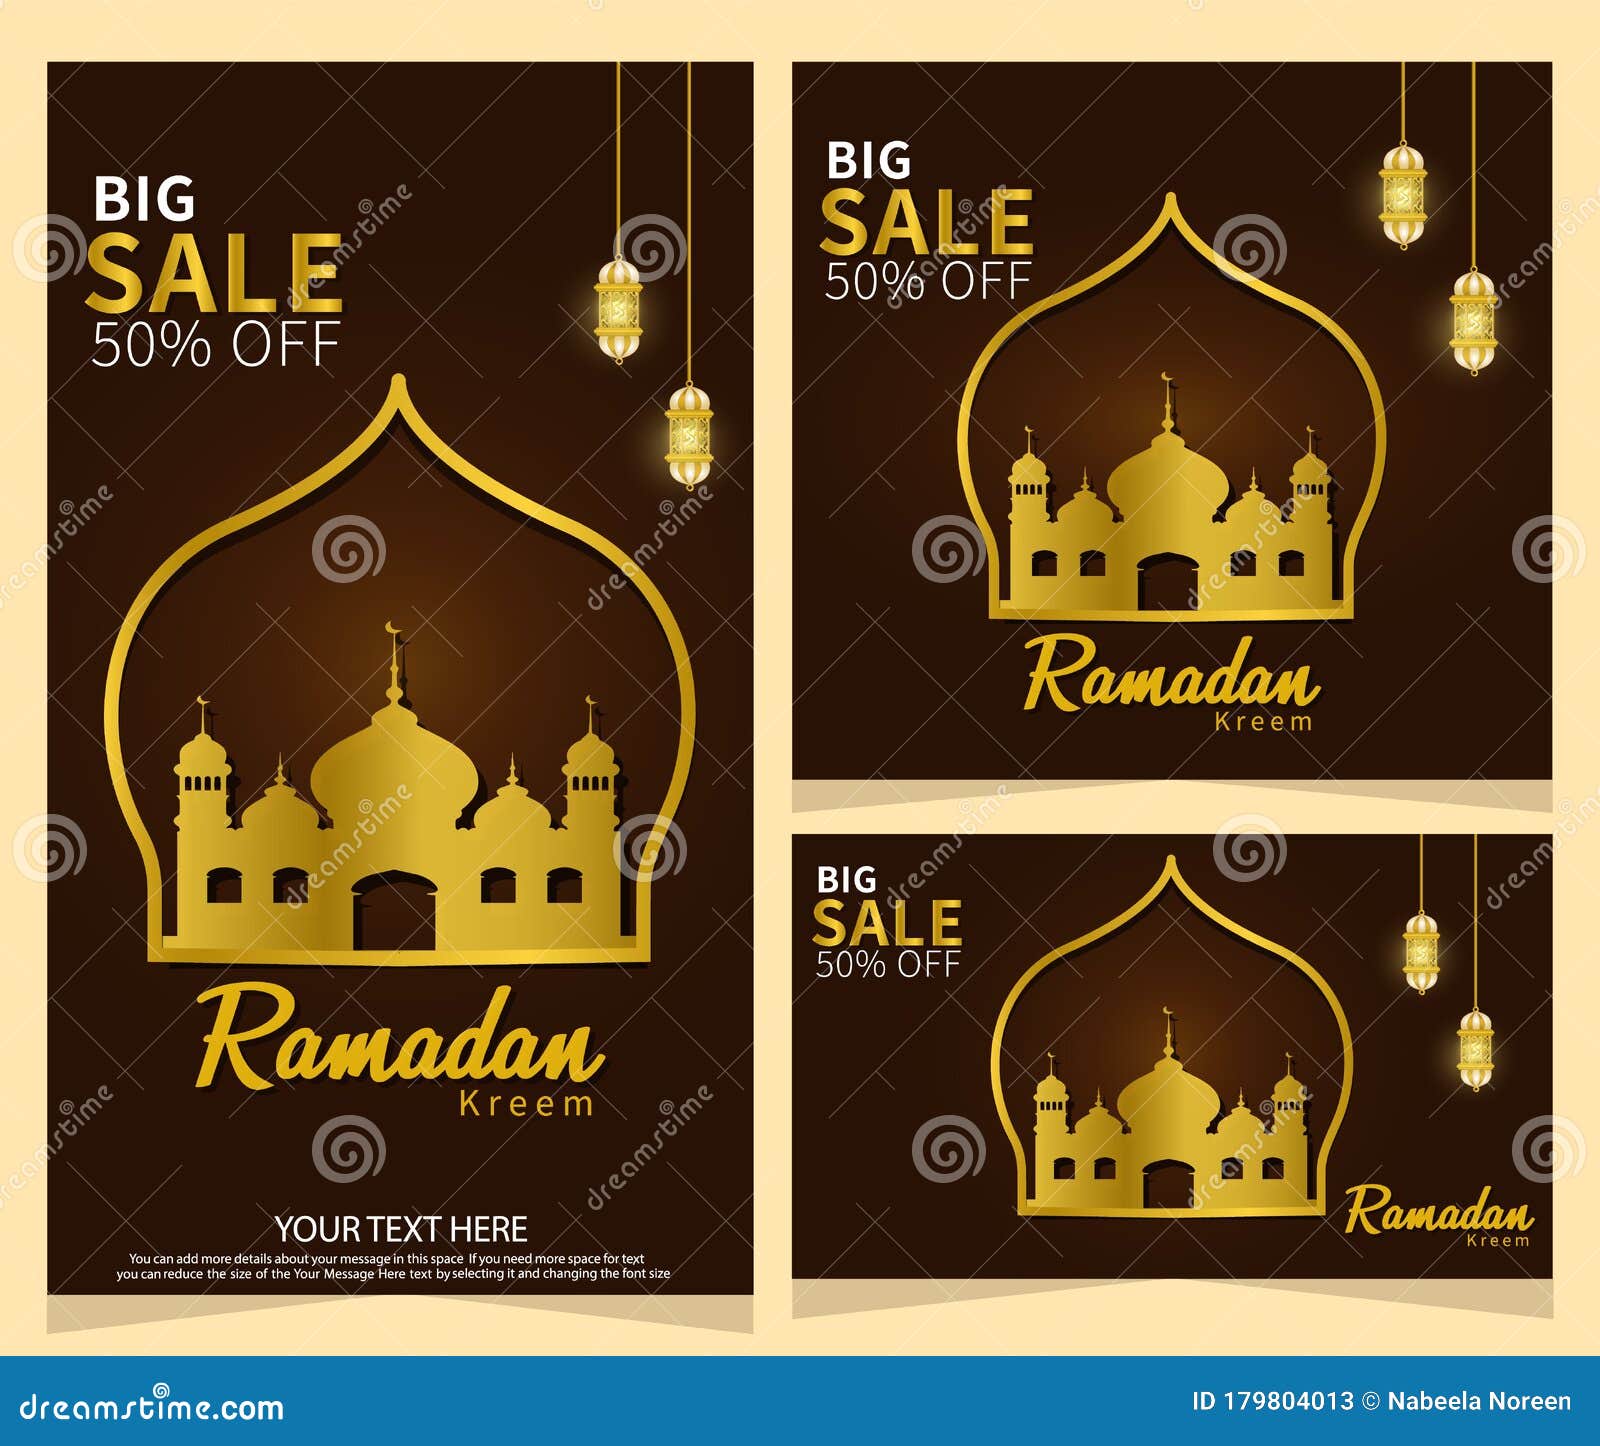 Ramadan Kareem Islamic Design Happy And Blessed Ramazan Sale